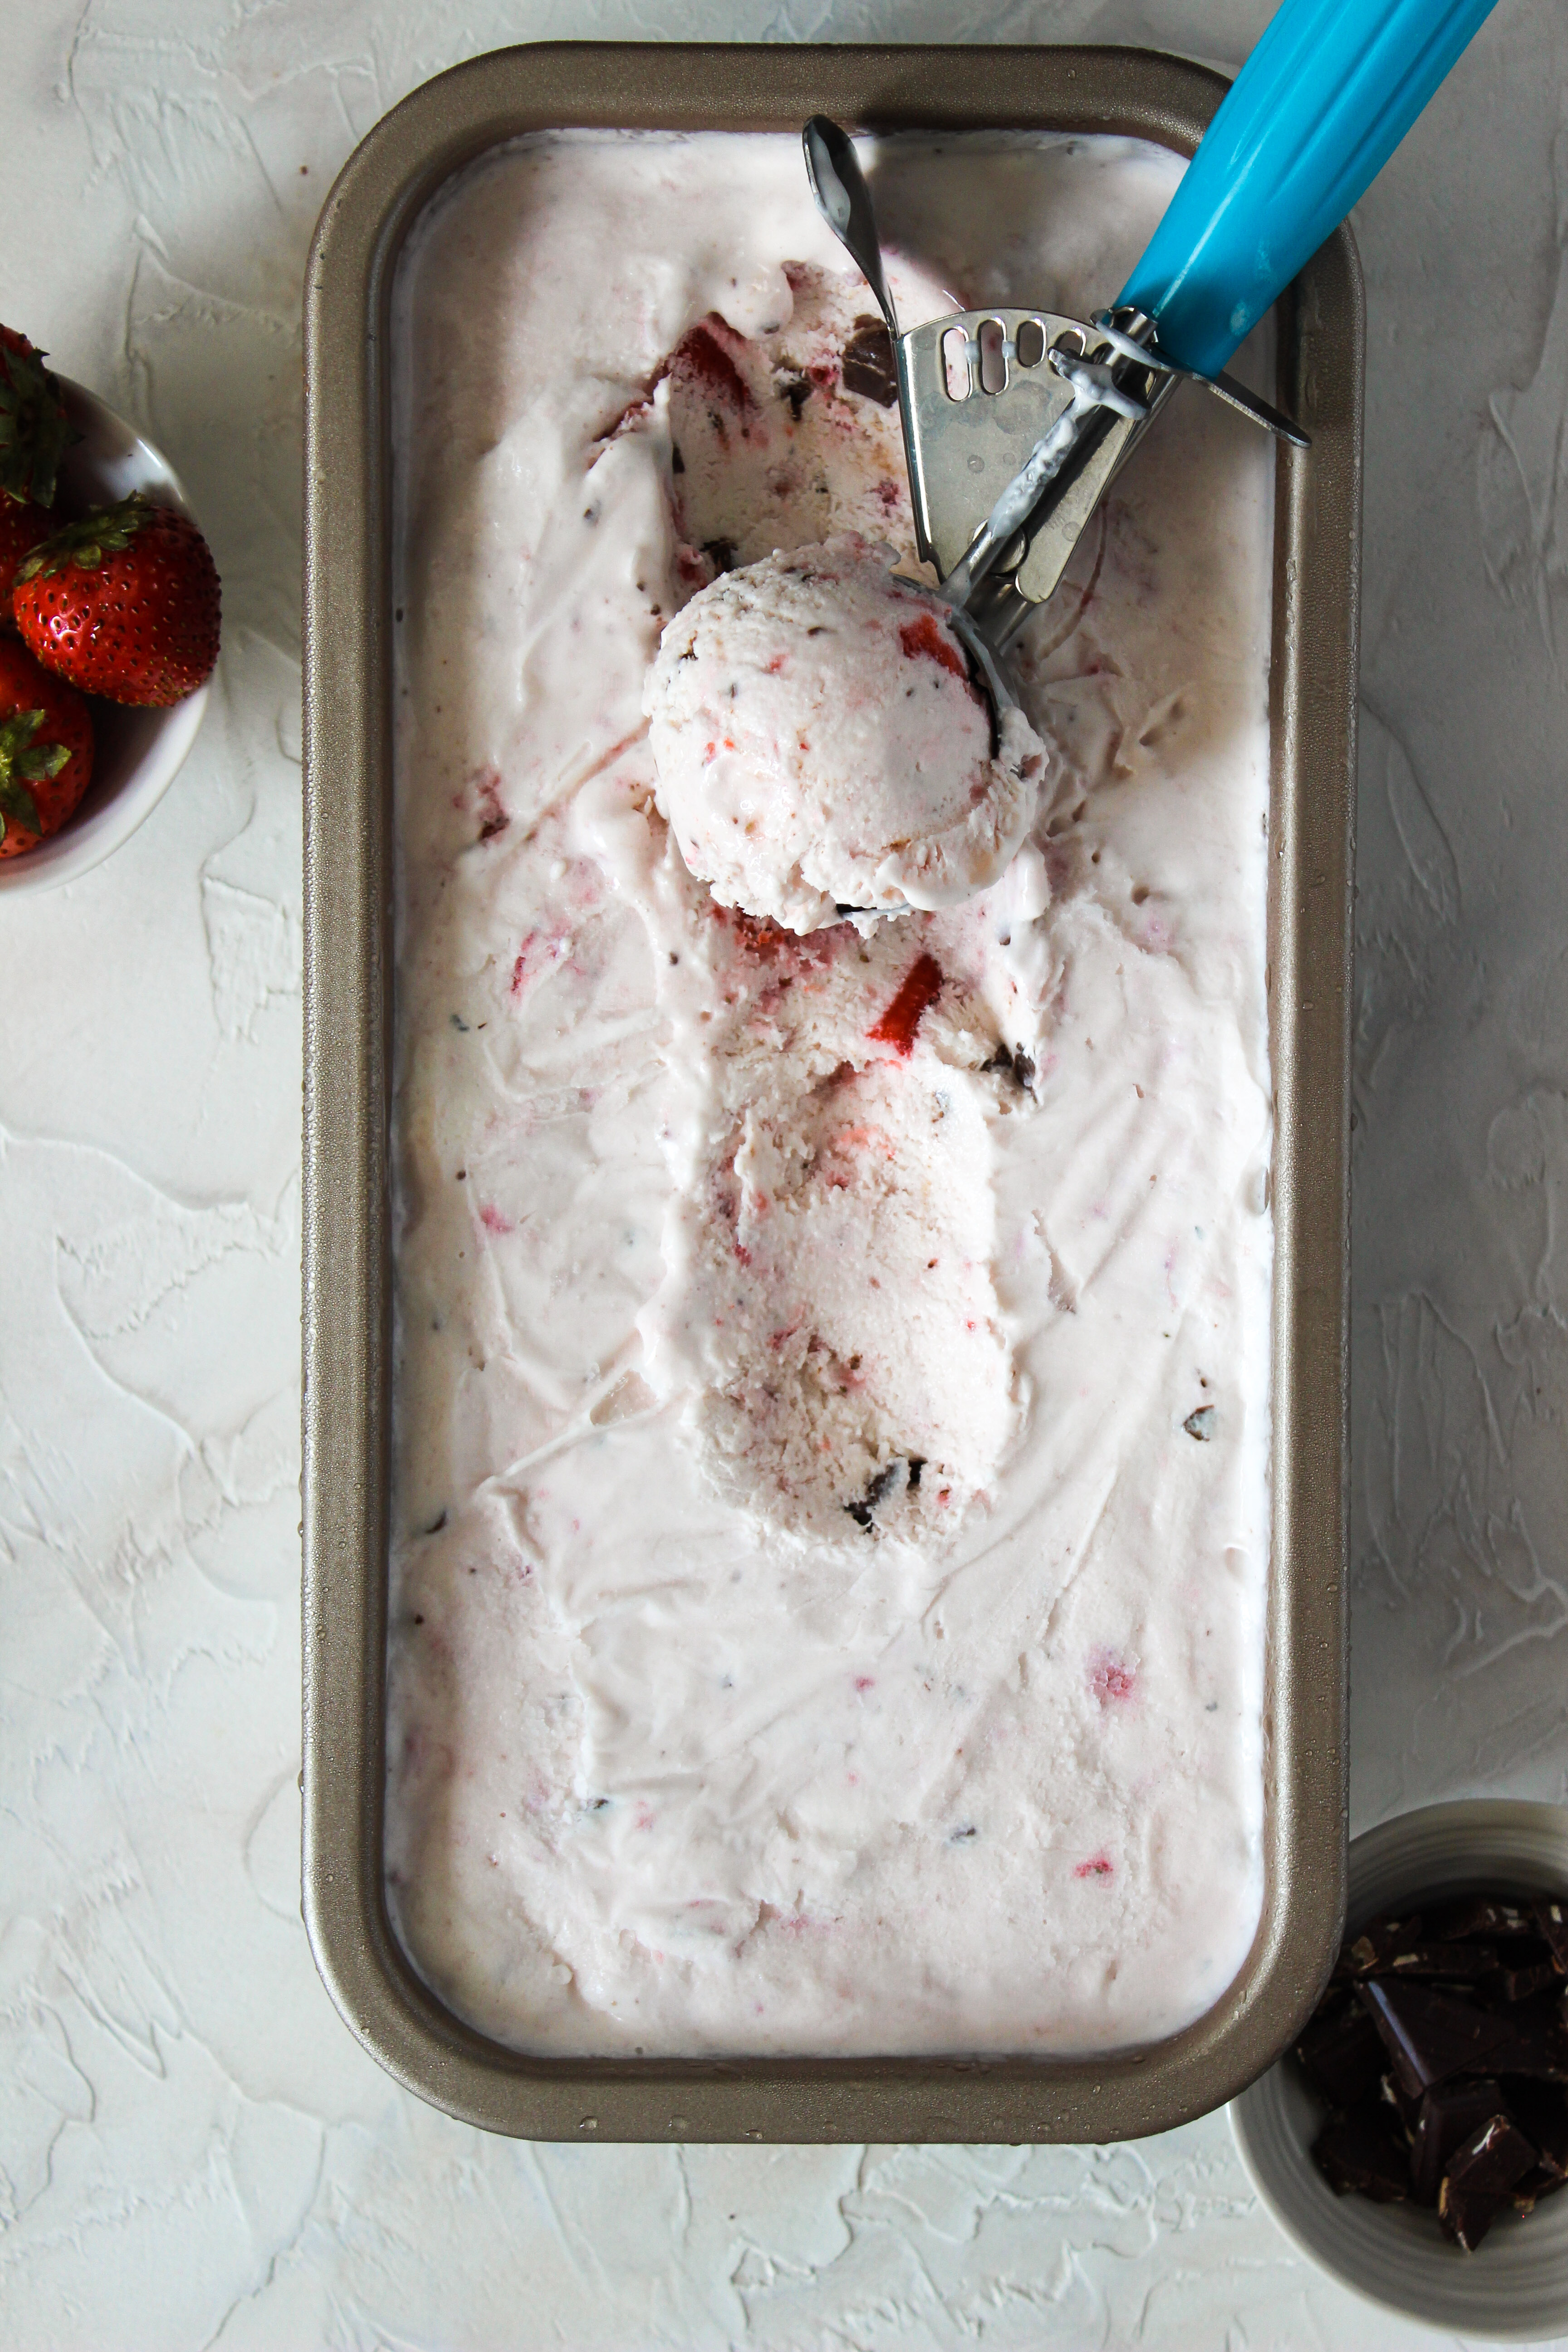 No-churn strawberry ice cream with chocolate chunks